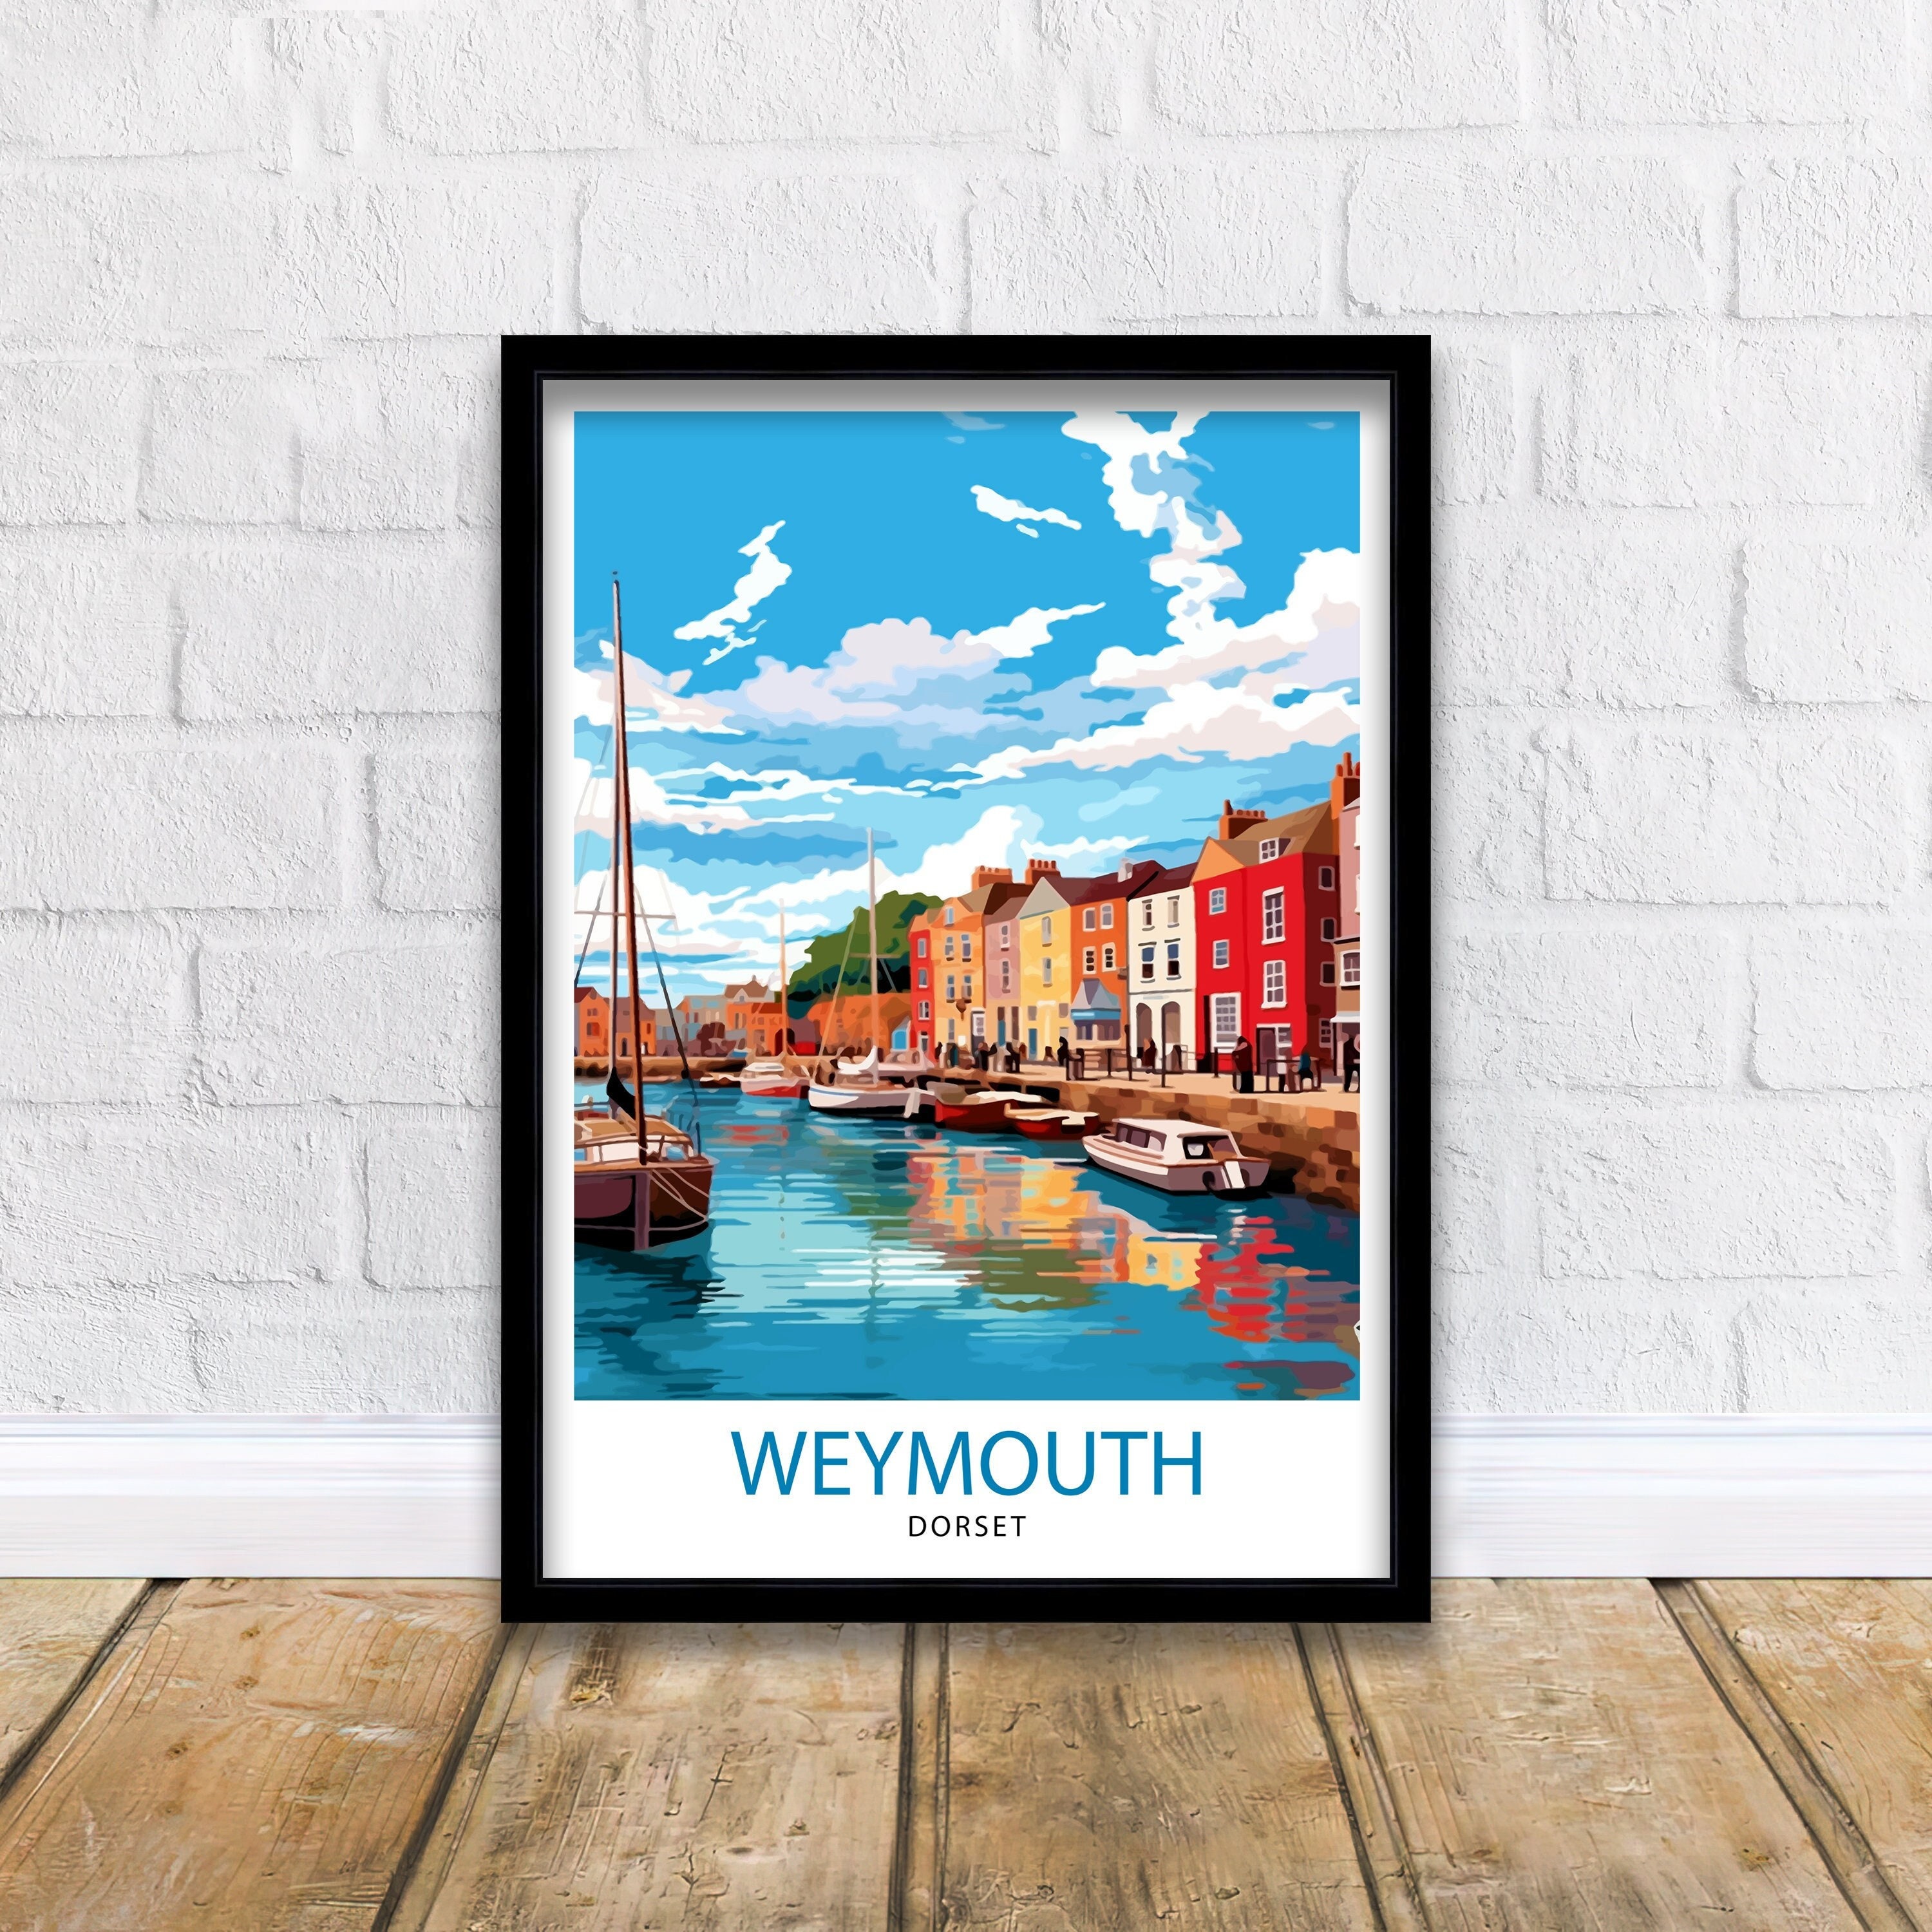 Weymouth image